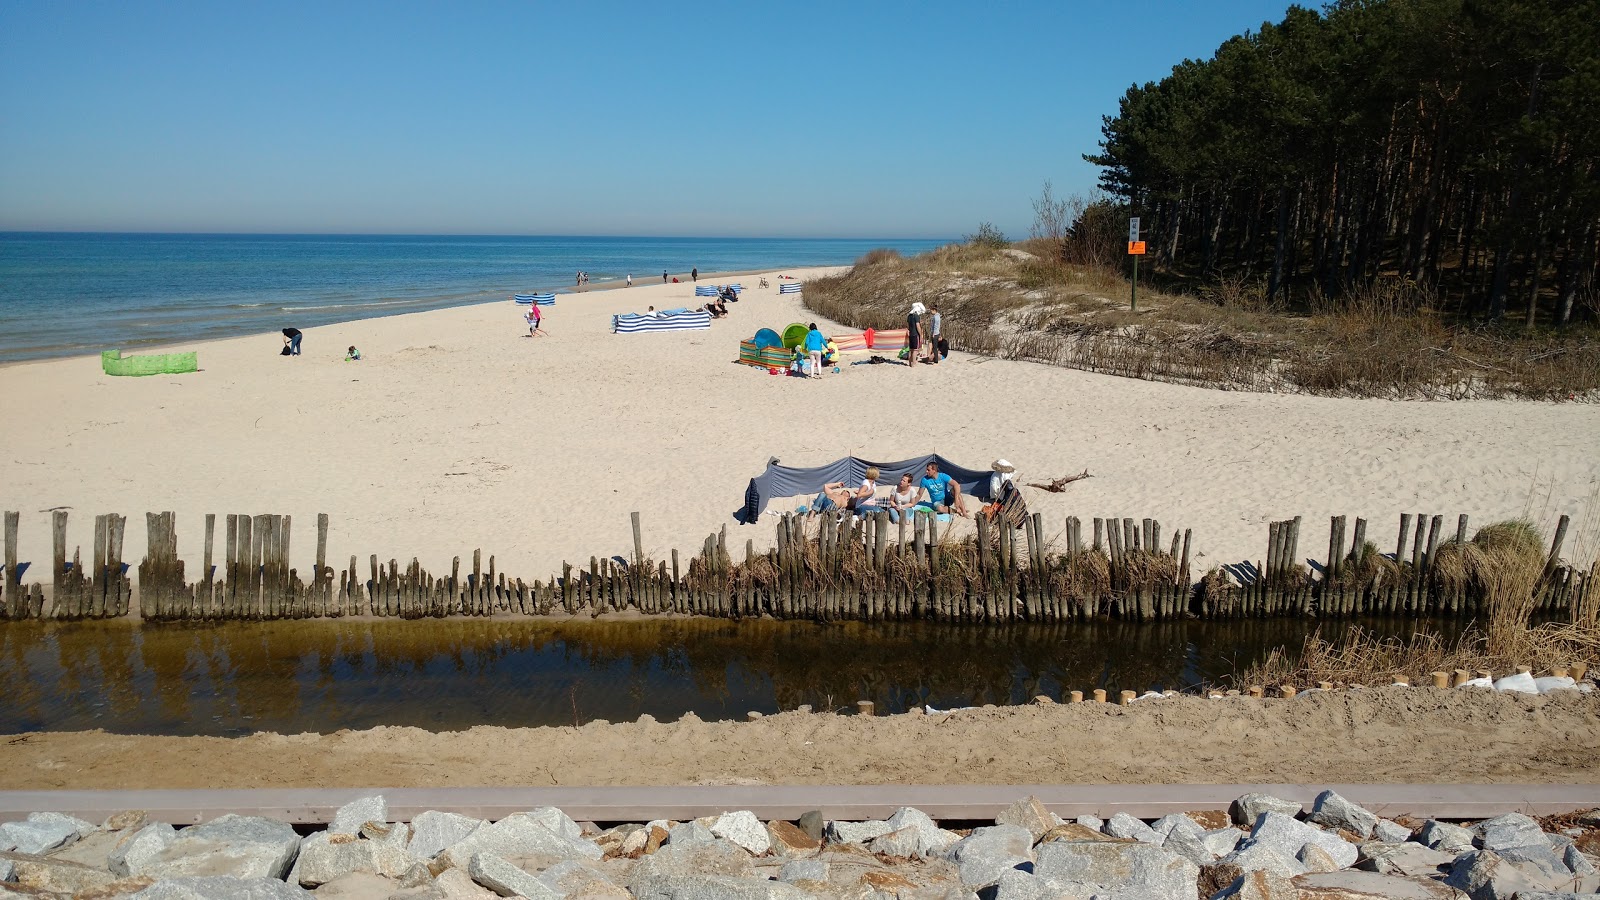 Photo of Karviya - Vkhod Beach - popular place among relax connoisseurs